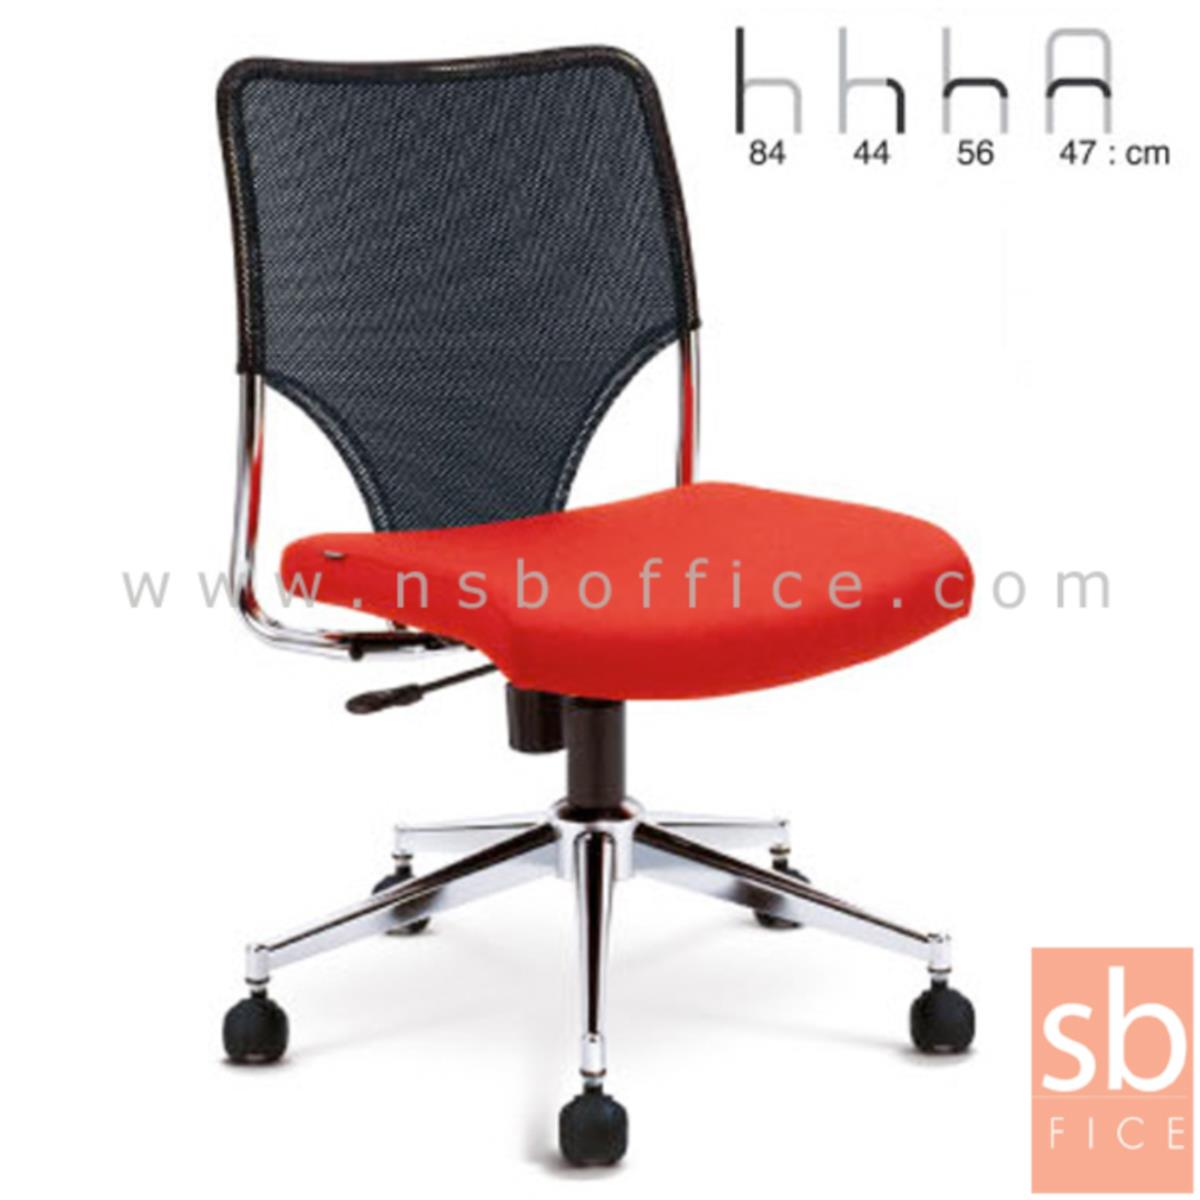 B28A010:เก้าอี้สำนักงานหลังเน็ต รุ่น Herbert (เฮอร์เบิร์ต)  โช๊คแก๊ส มีก้อนโยก ขาเหล็กชุบโครเมี่ยม